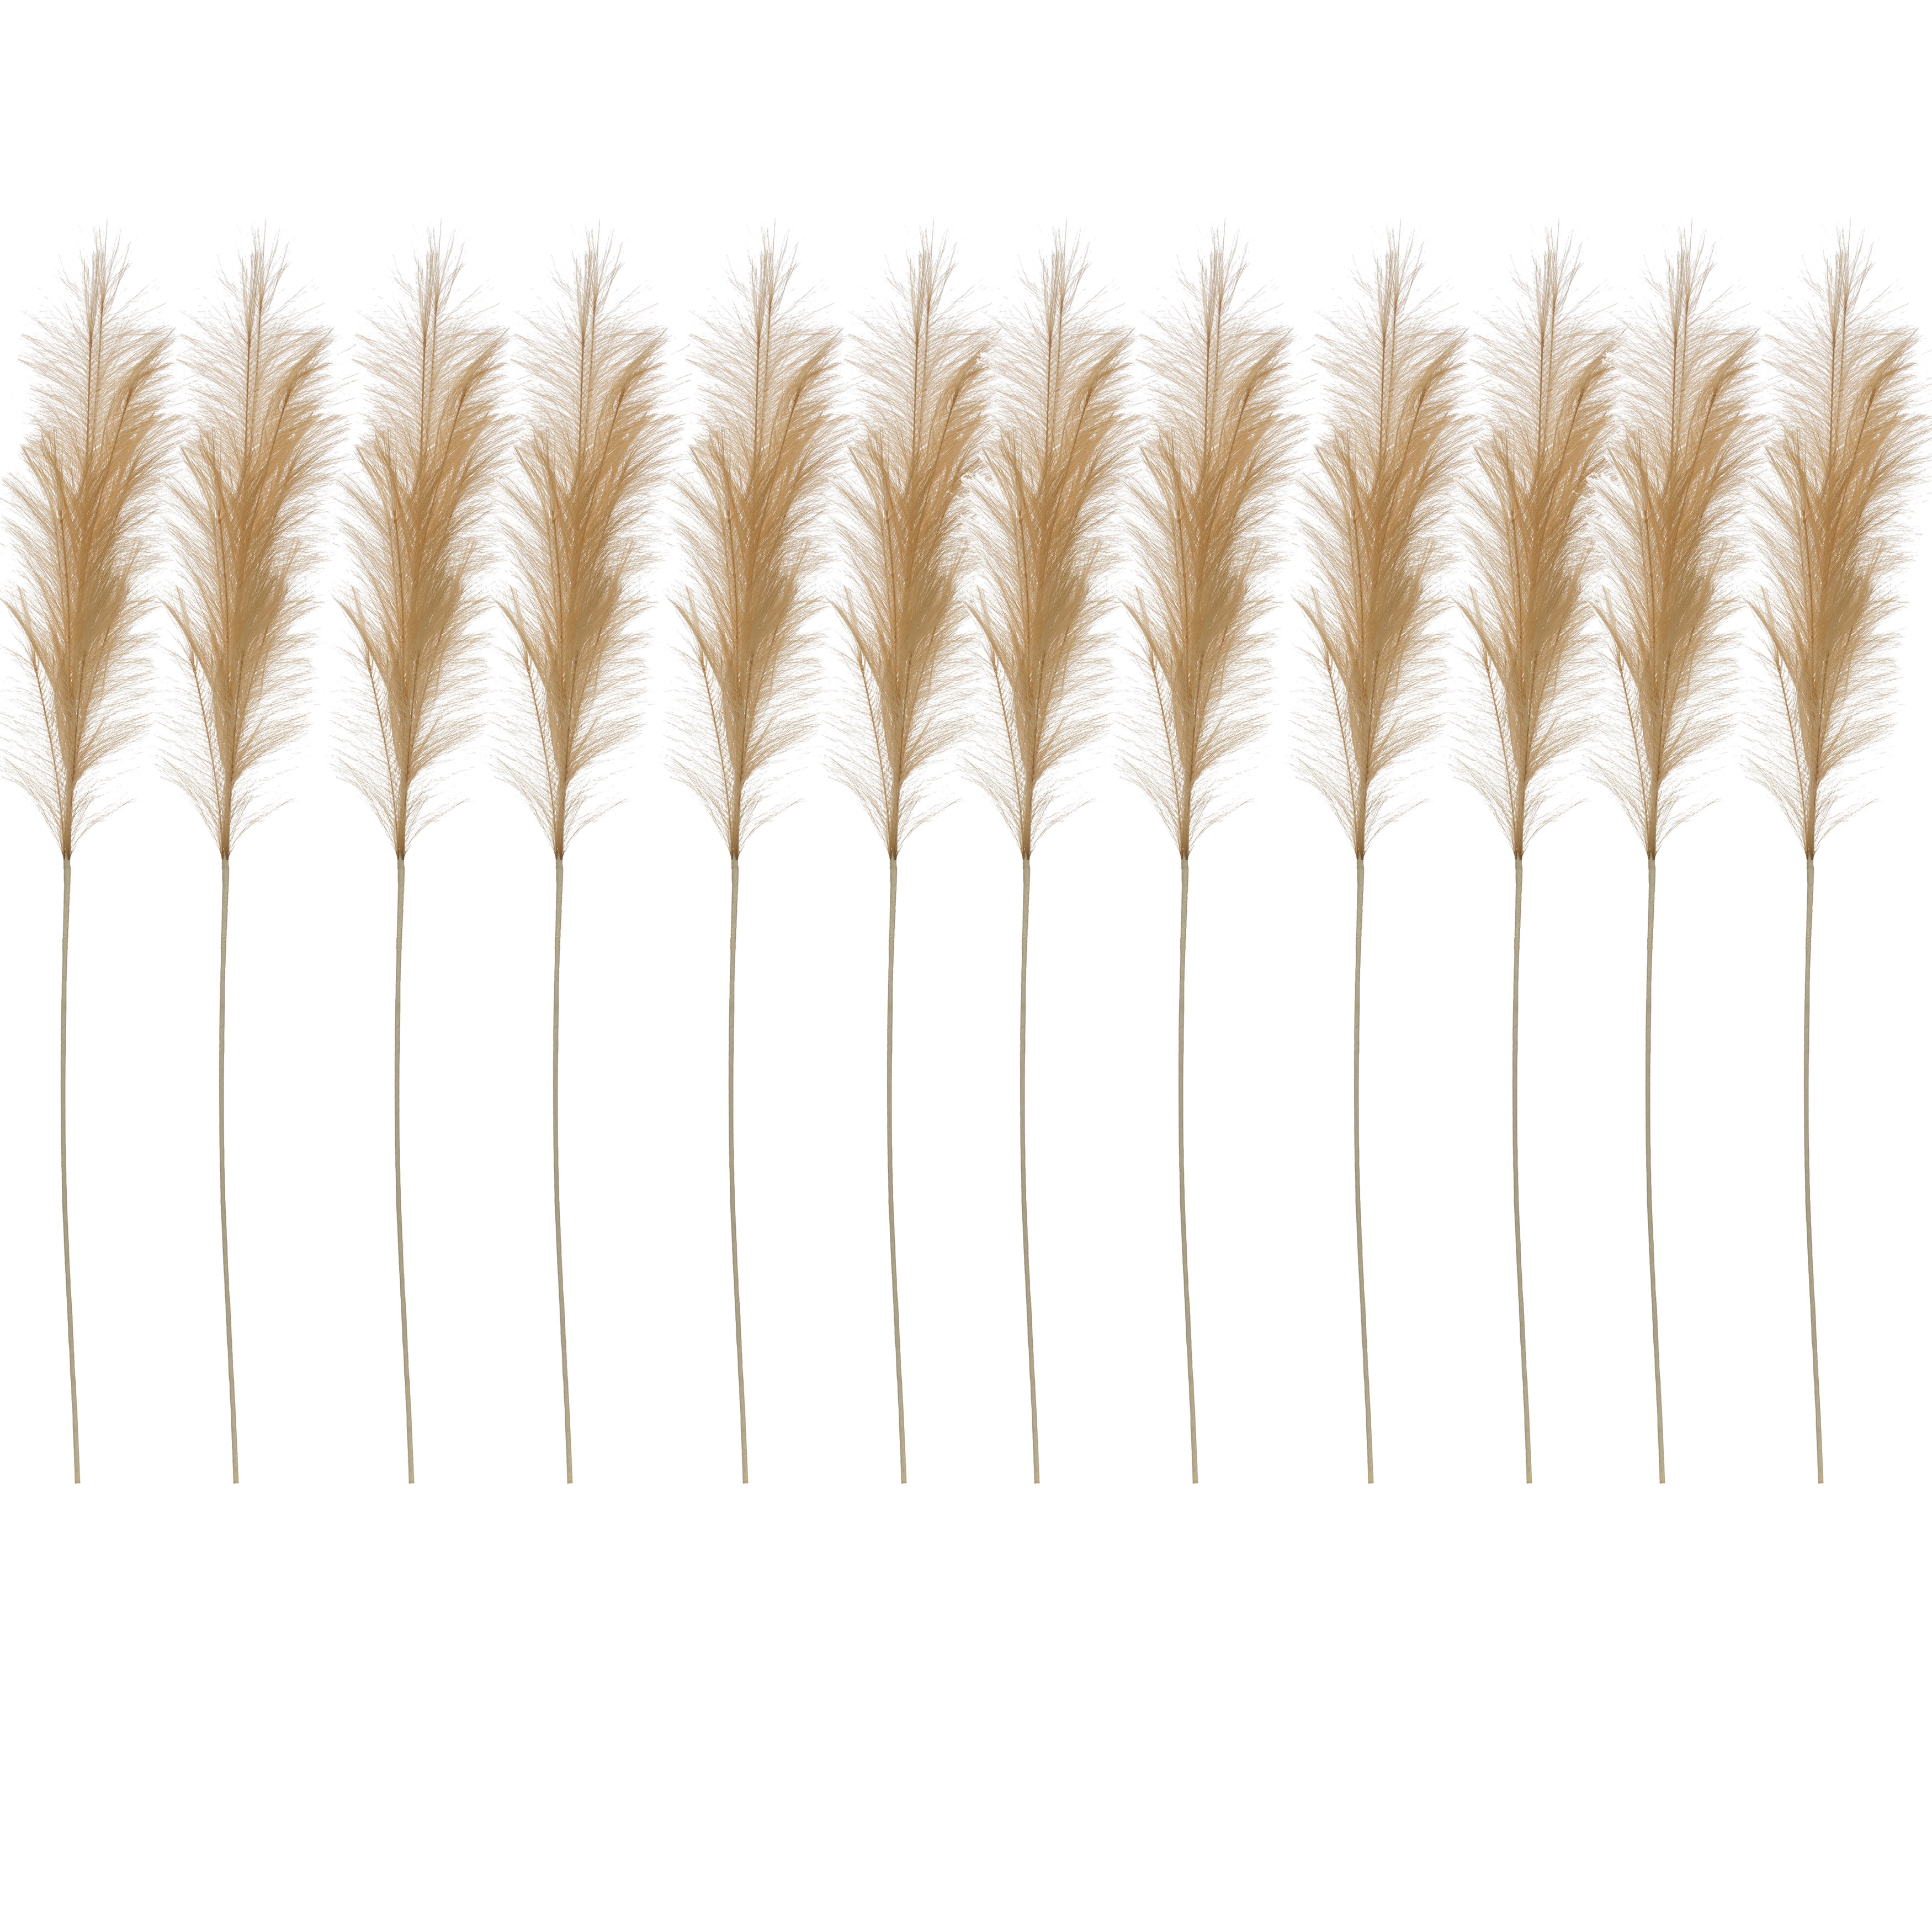 Polyester Bristle Grass Branch, Set of 12 - Image 0